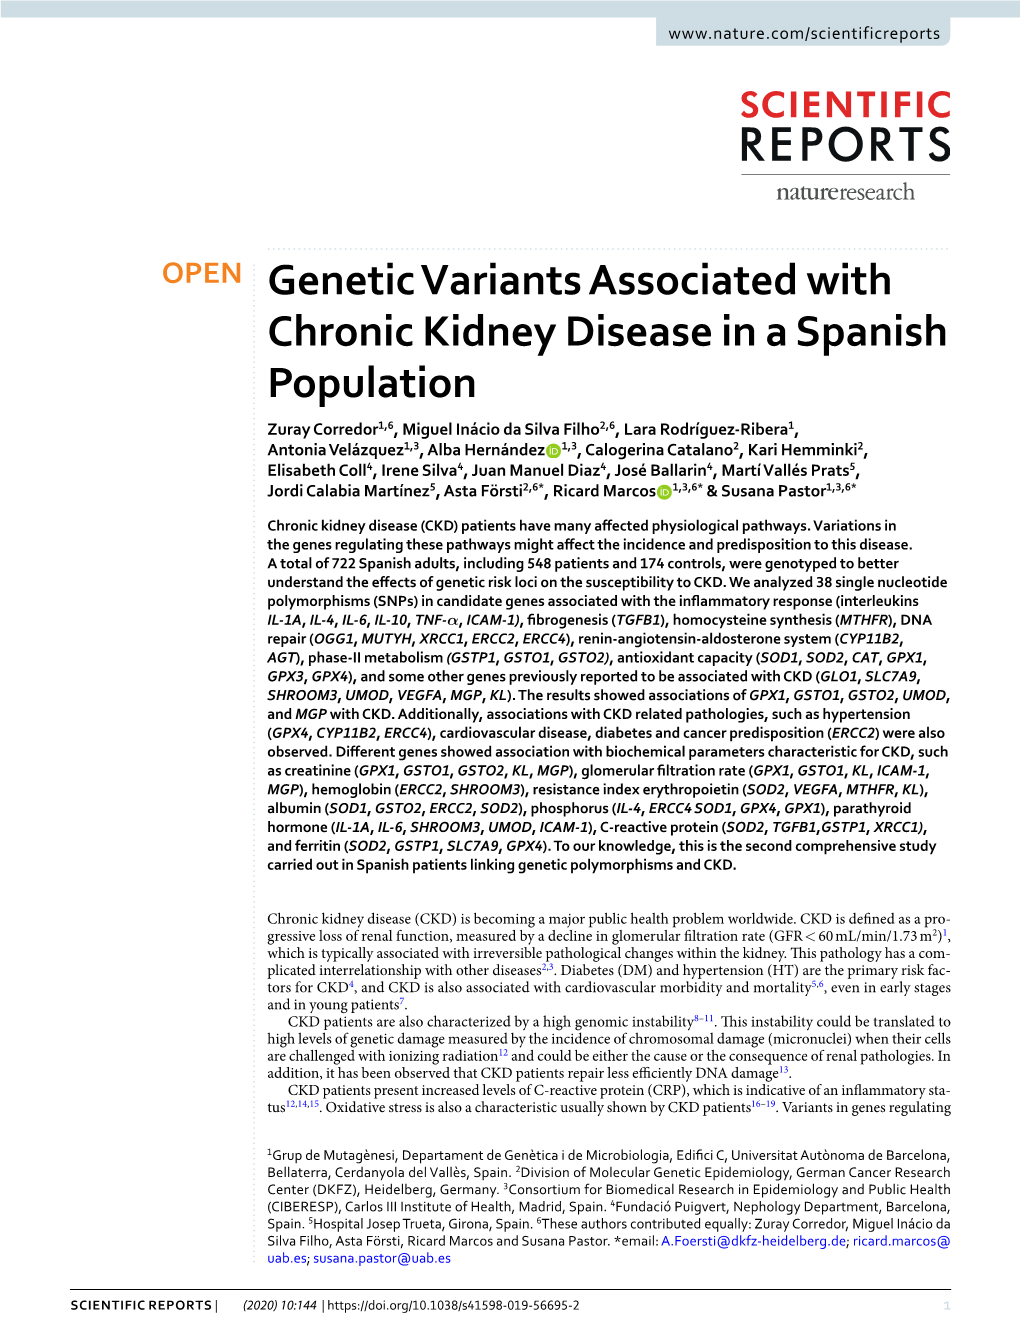 Genetic Variants Associated with Chronic Kidney Disease In